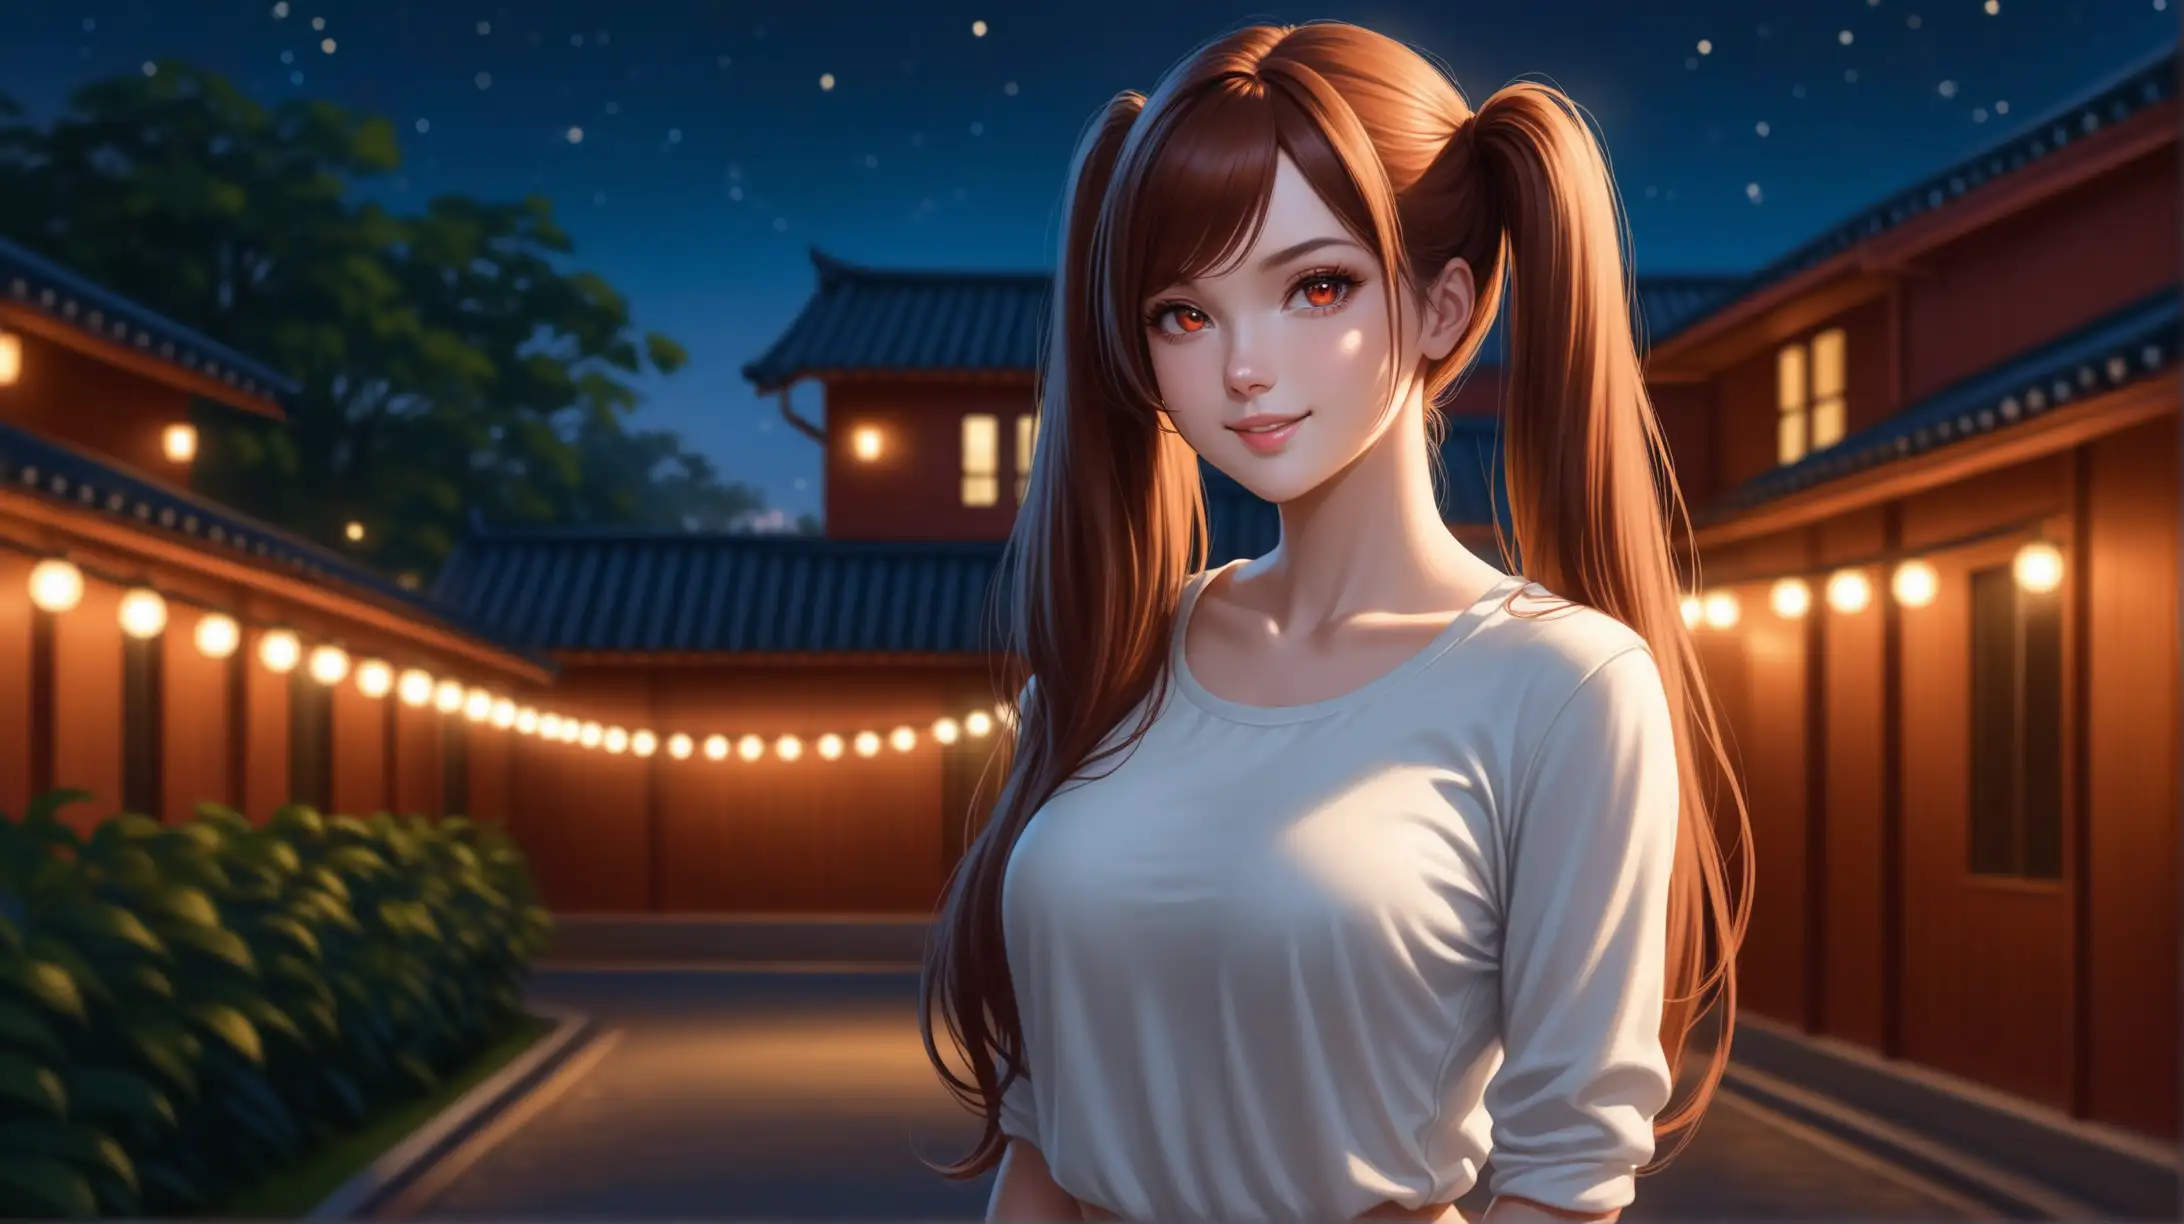 Seductive Woman with Long ReddishBrown Hair in Night Lighting